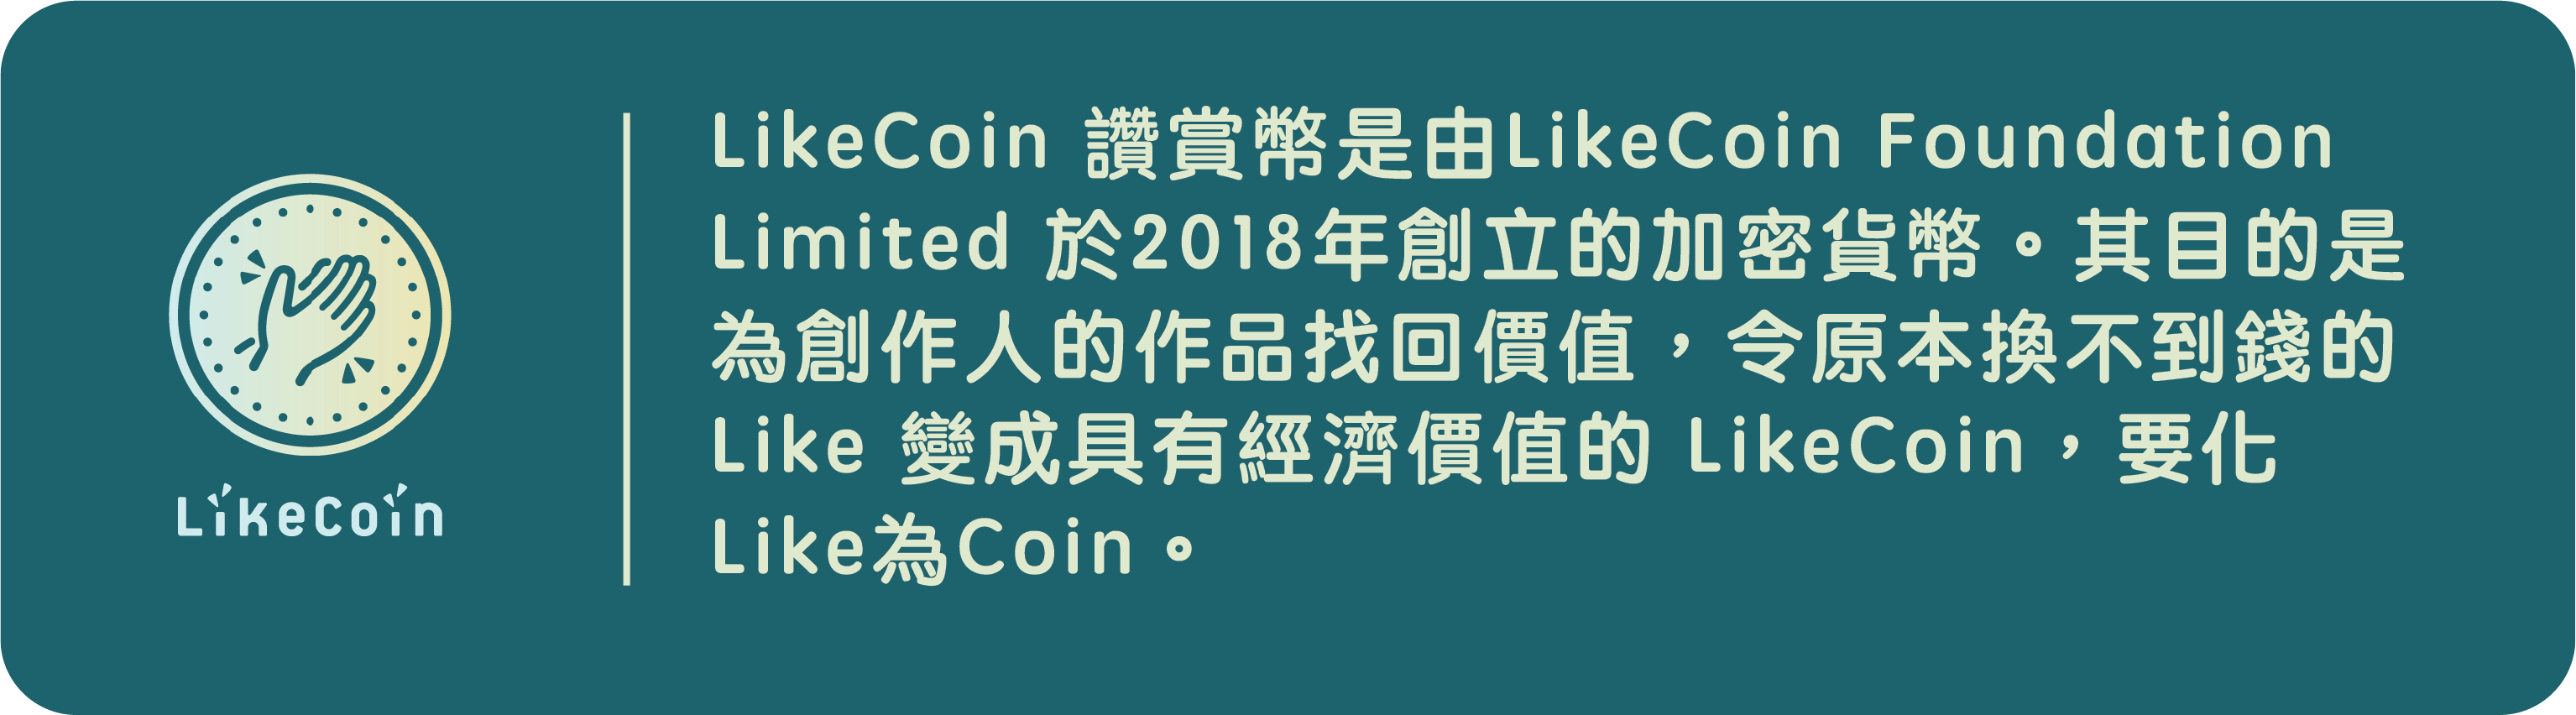 LikeCoin是由LikeCoin Foundation Limited 於2018年創立的加密貨幣。其目的是為創作人的作品找回價值，令原本換不到錢的 Like 變成具有經濟價值的 LikeCoin，要化Like為Coin。